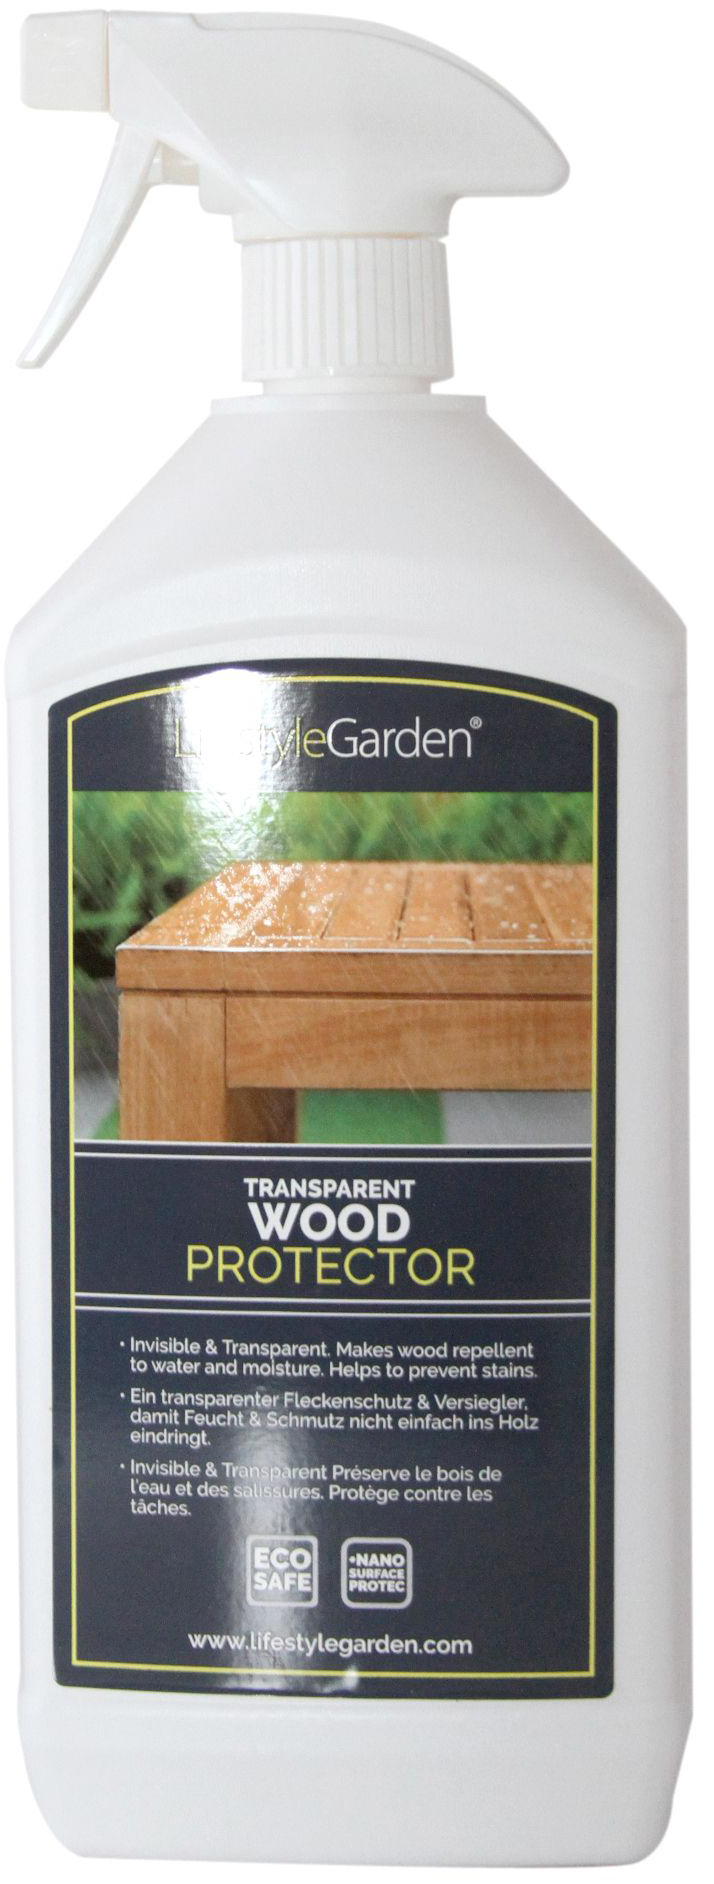 LifestyleGarden Transparent Wood Protector - 1 Litre